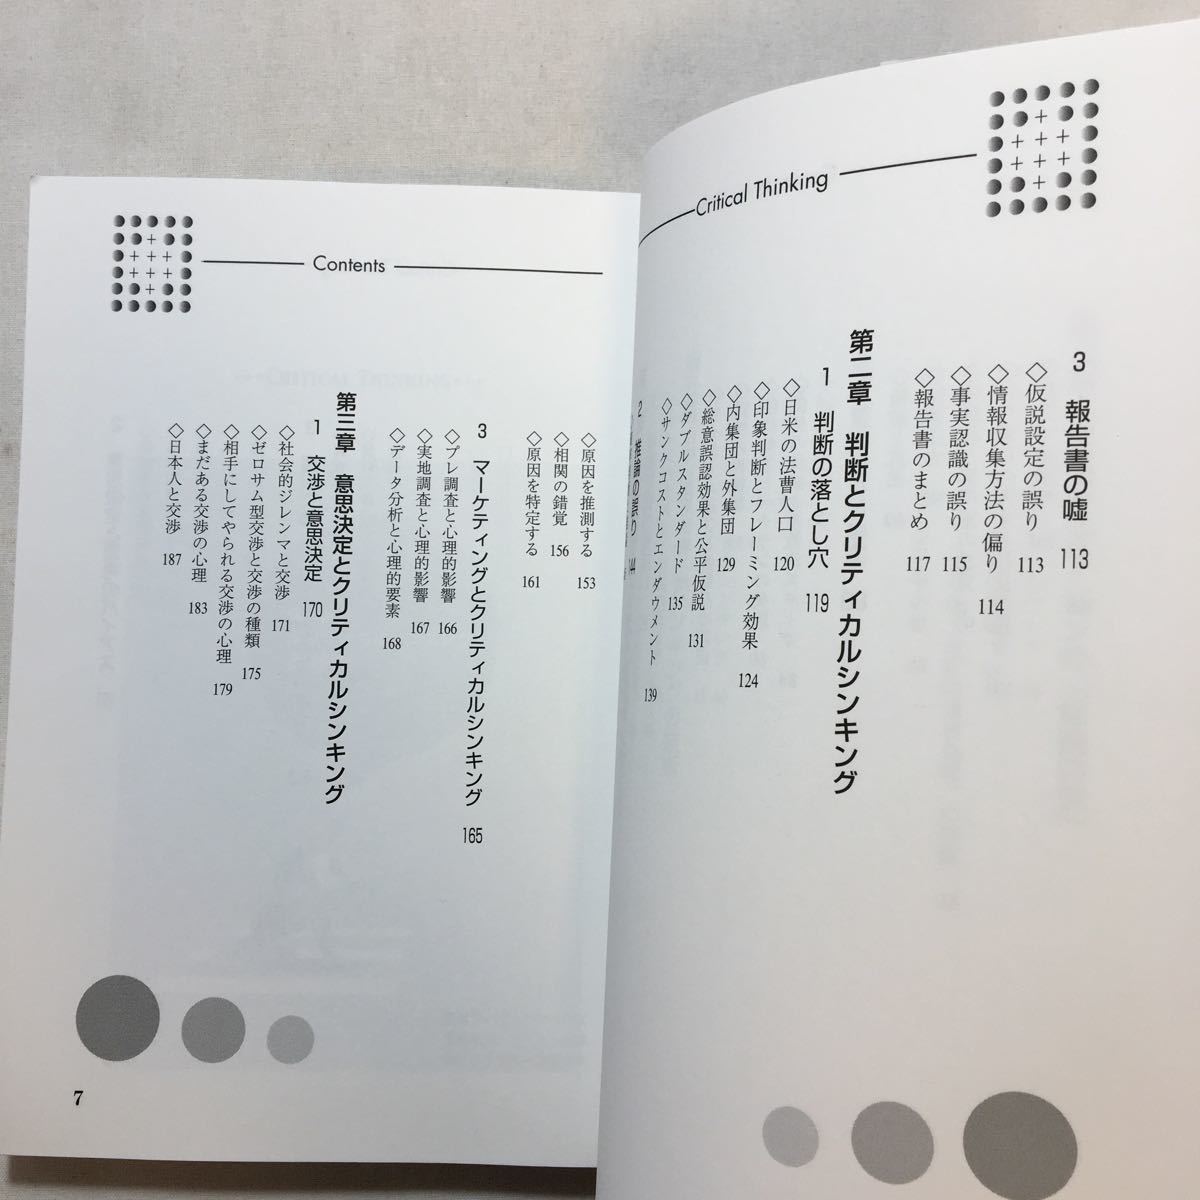 zaa-230♪クリティカルシンキングの技術 　寺田 欣司 (著)　単行本 2001/10/1_画像4